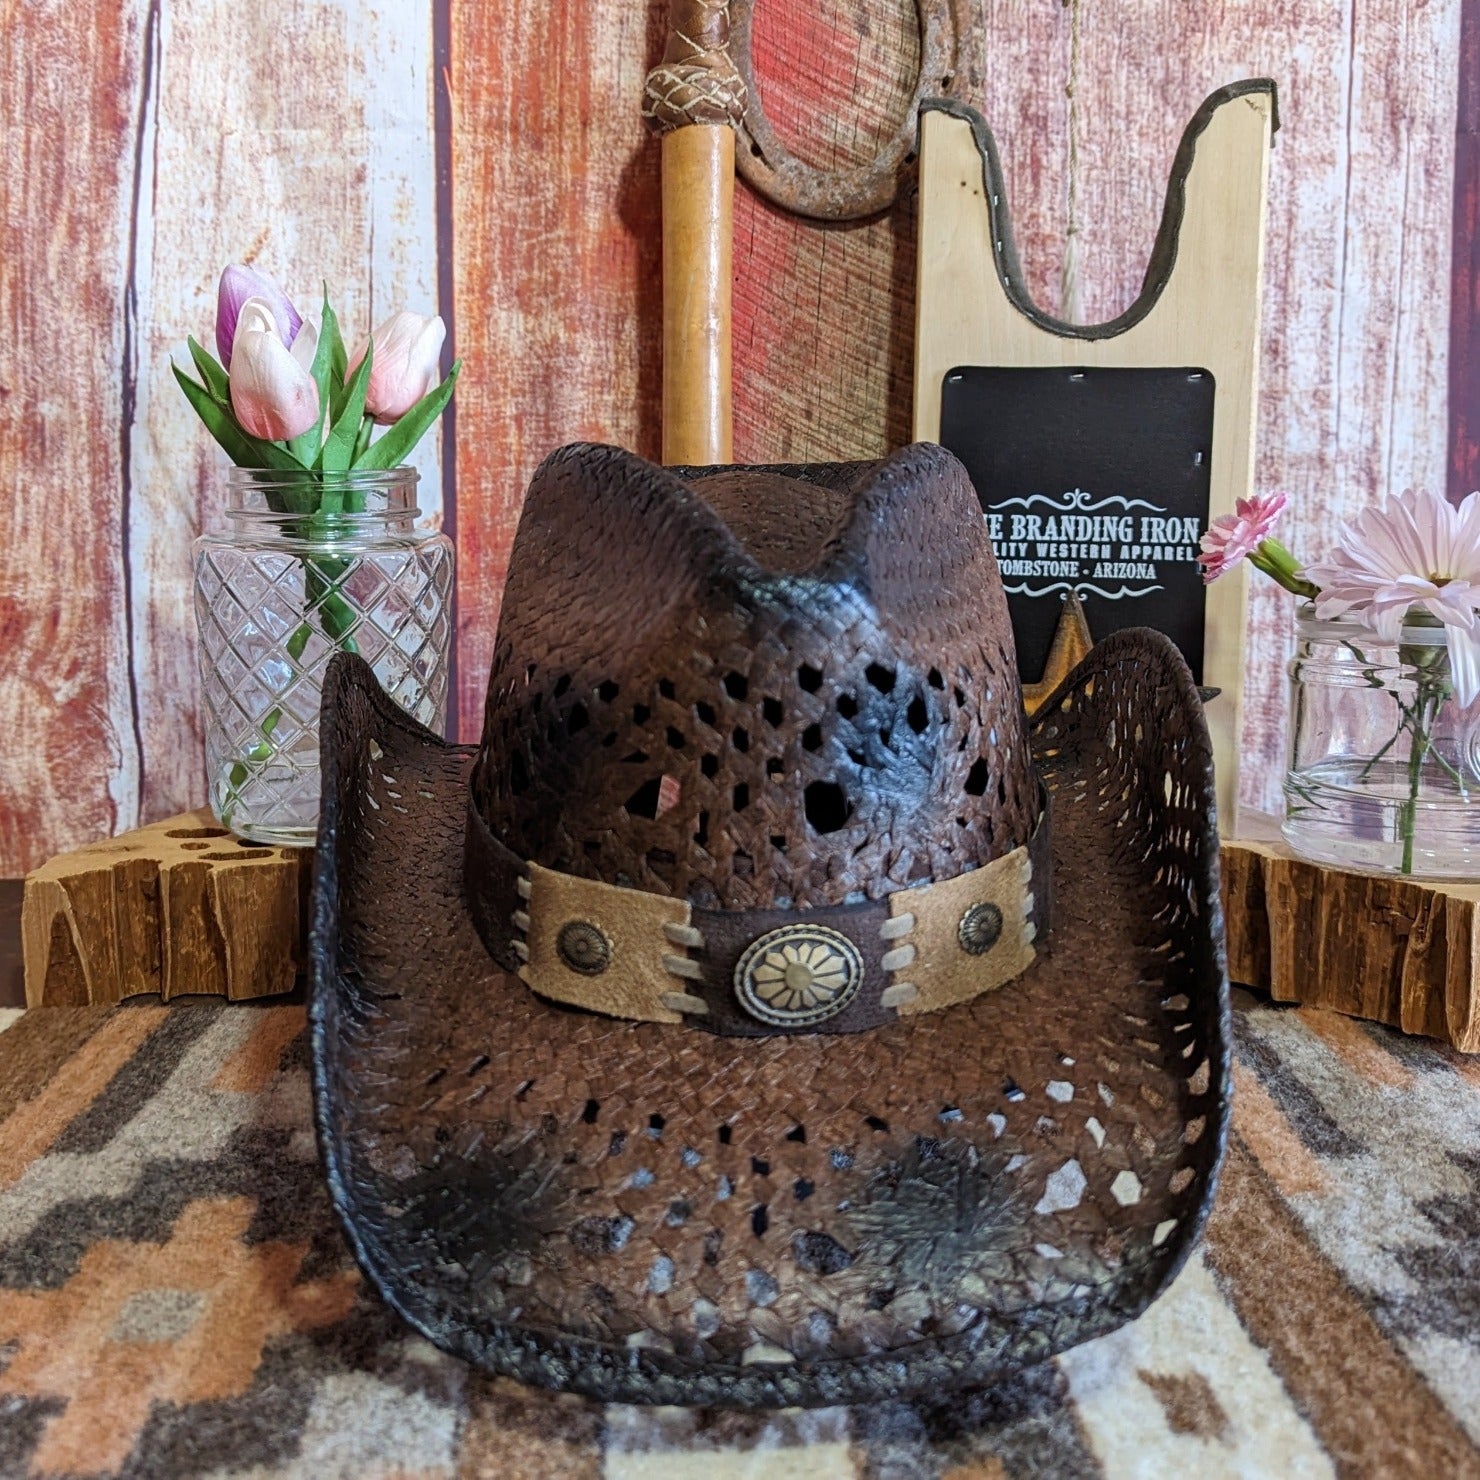 Chapeau cowboy western country